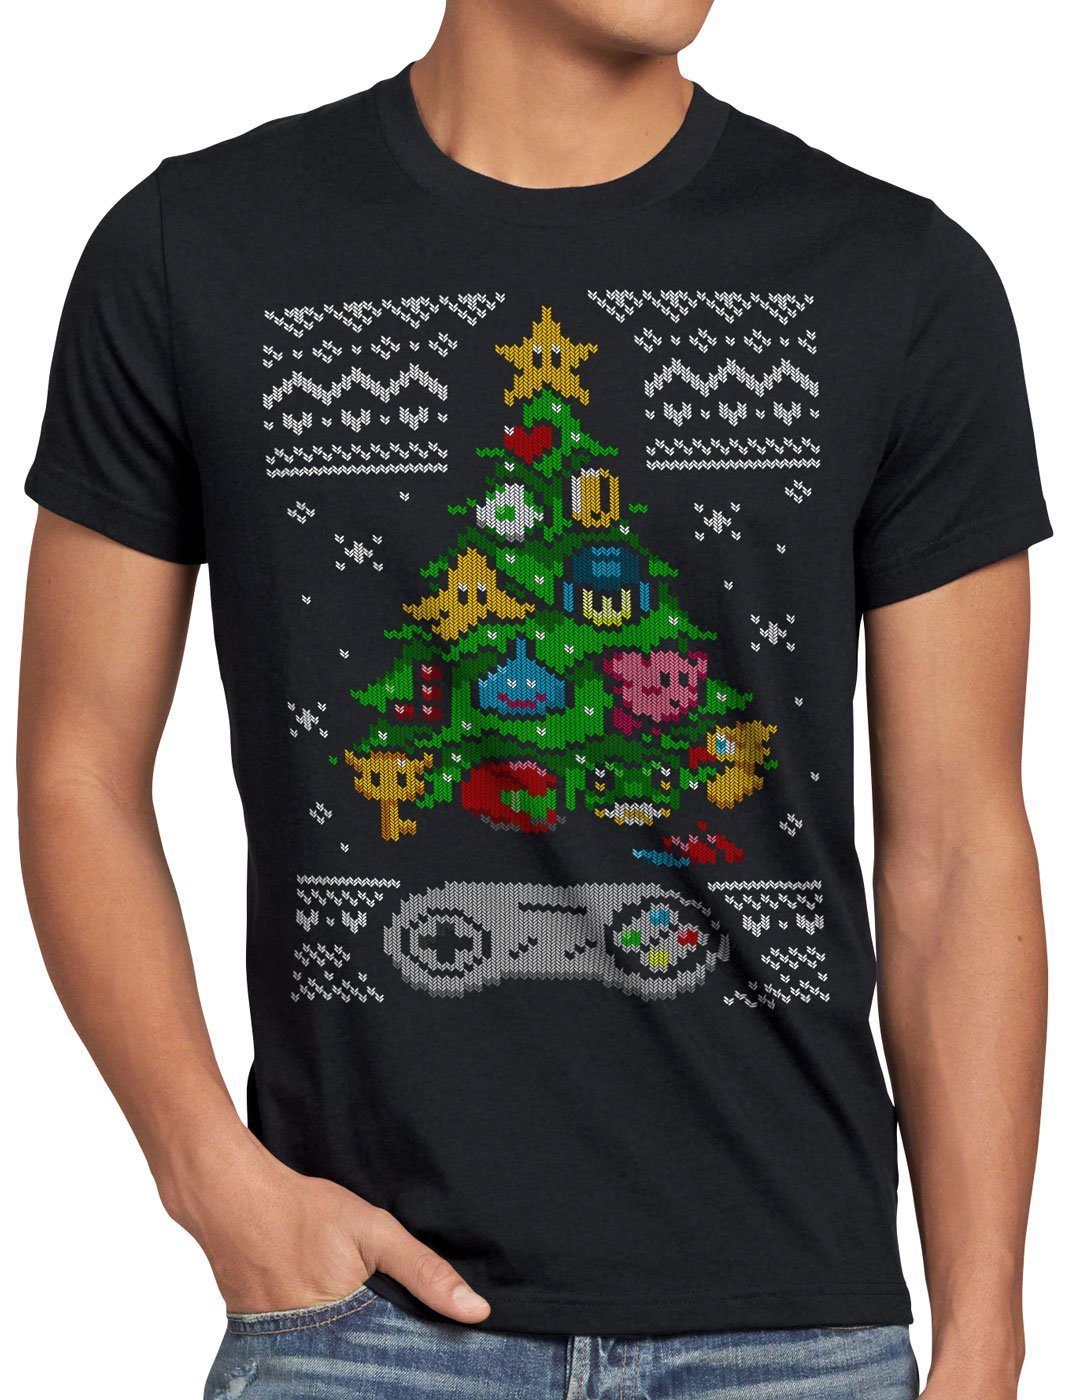 style3 Print-Shirt Herren T-Shirt 16-Bit Ugly Sweater x-mas pulli weihnachtsbaum